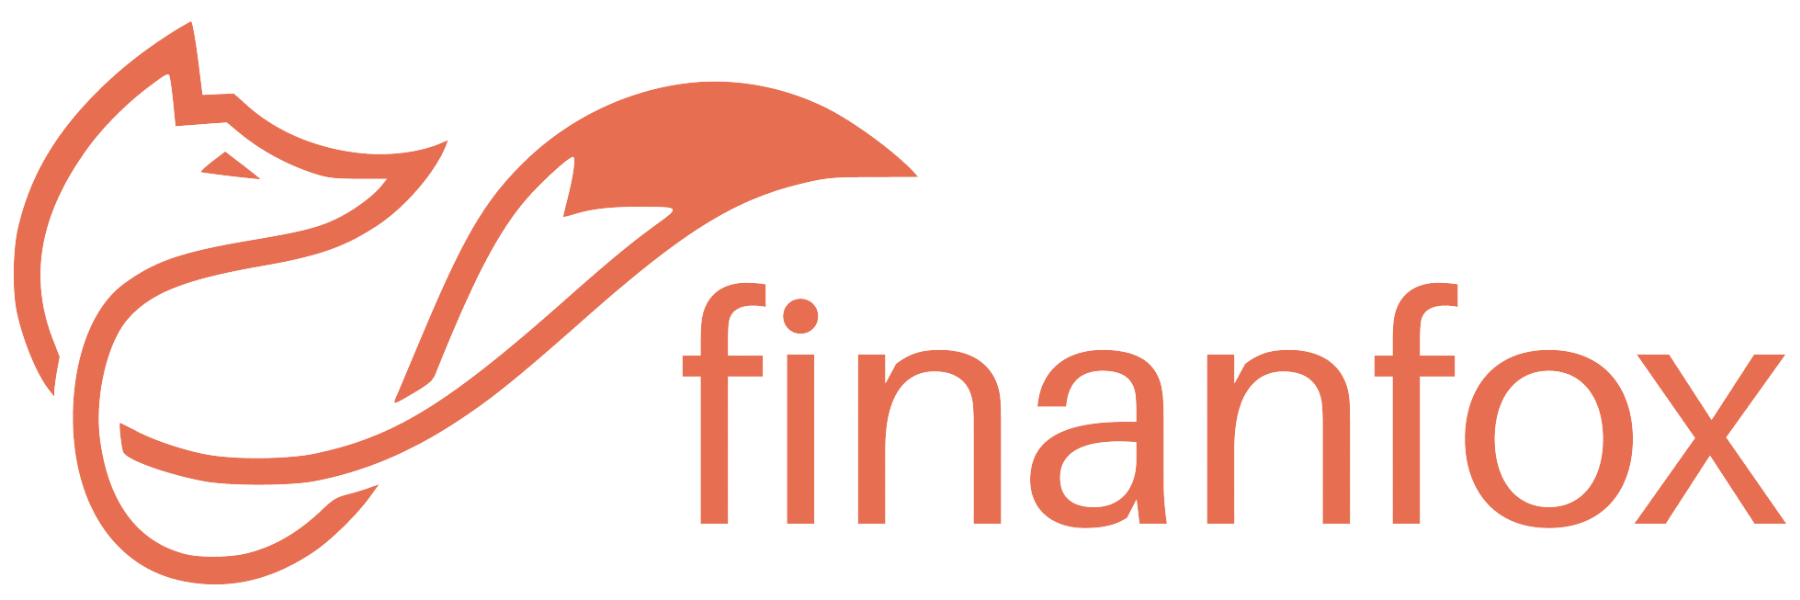 Finanfox